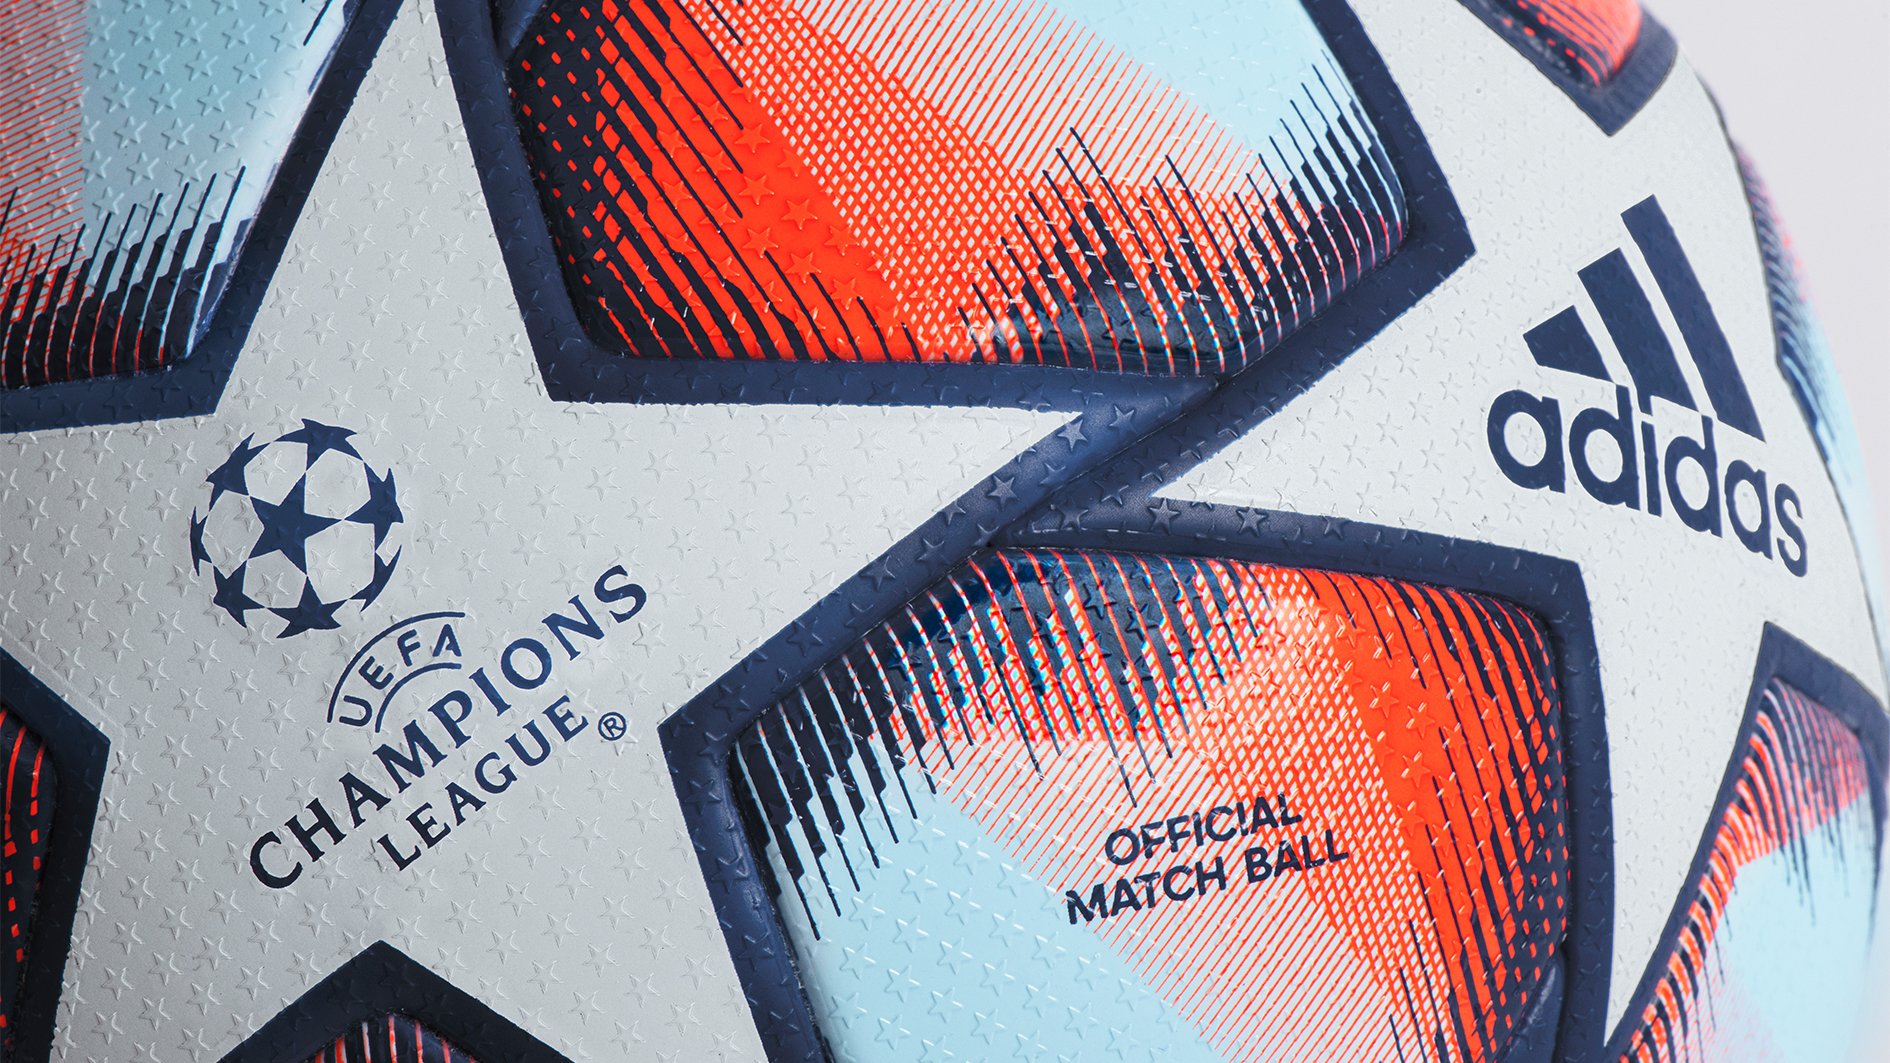 Official Match Ball Adidas Uefa Champions League 2020 2021 